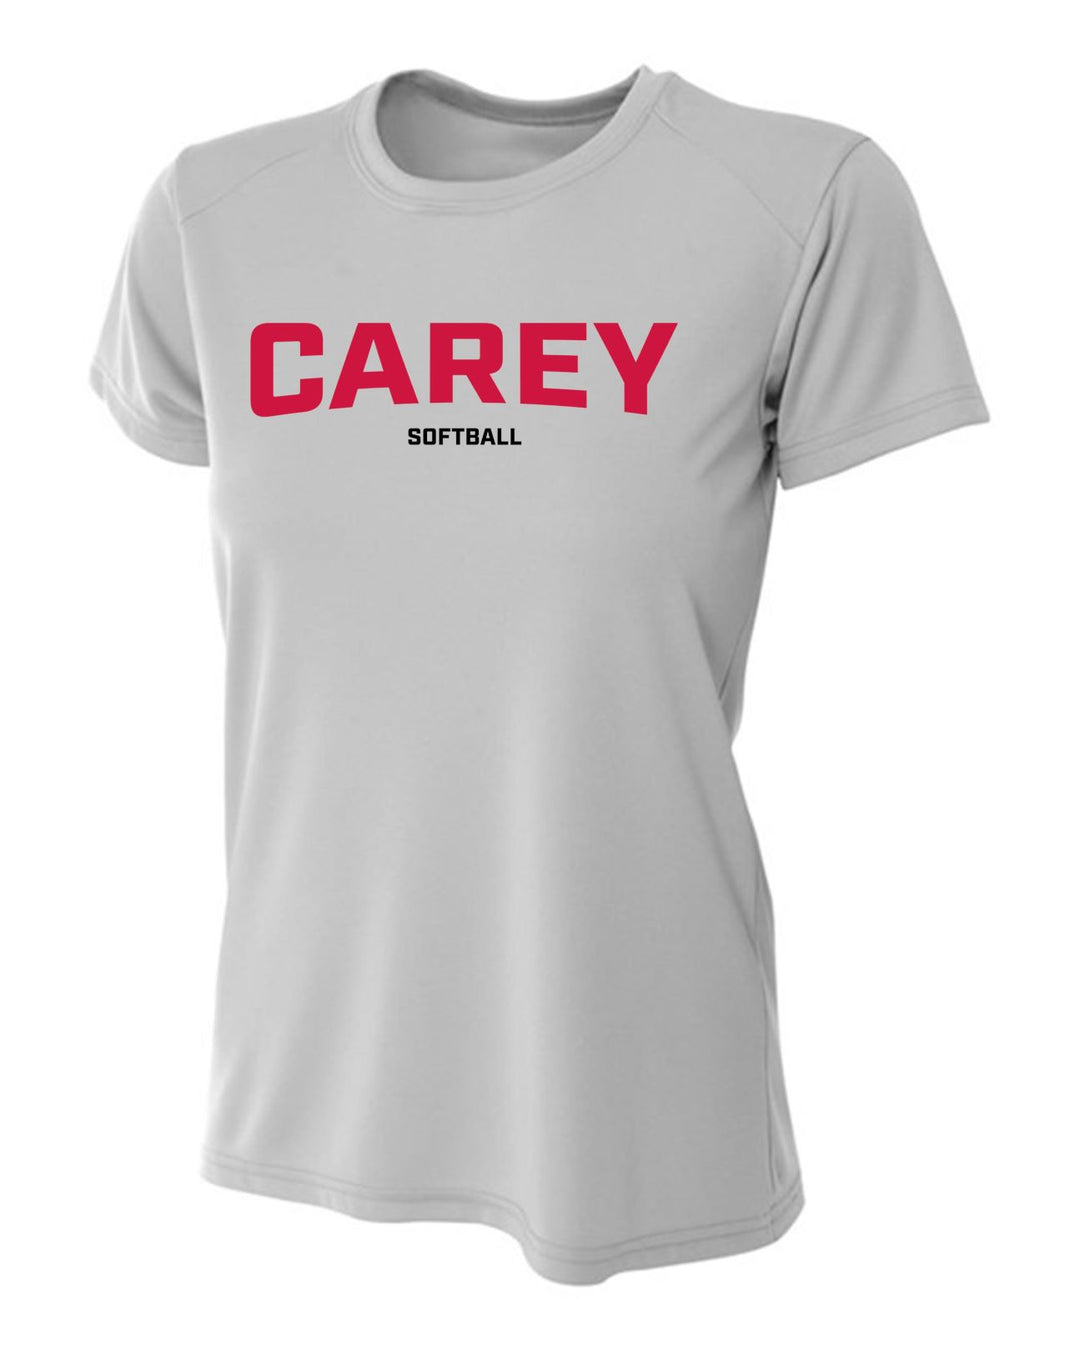 WCU Softball Women's Short-Sleeve Performance Shirt WCU Softball Silver CAREY - Third Coast Soccer